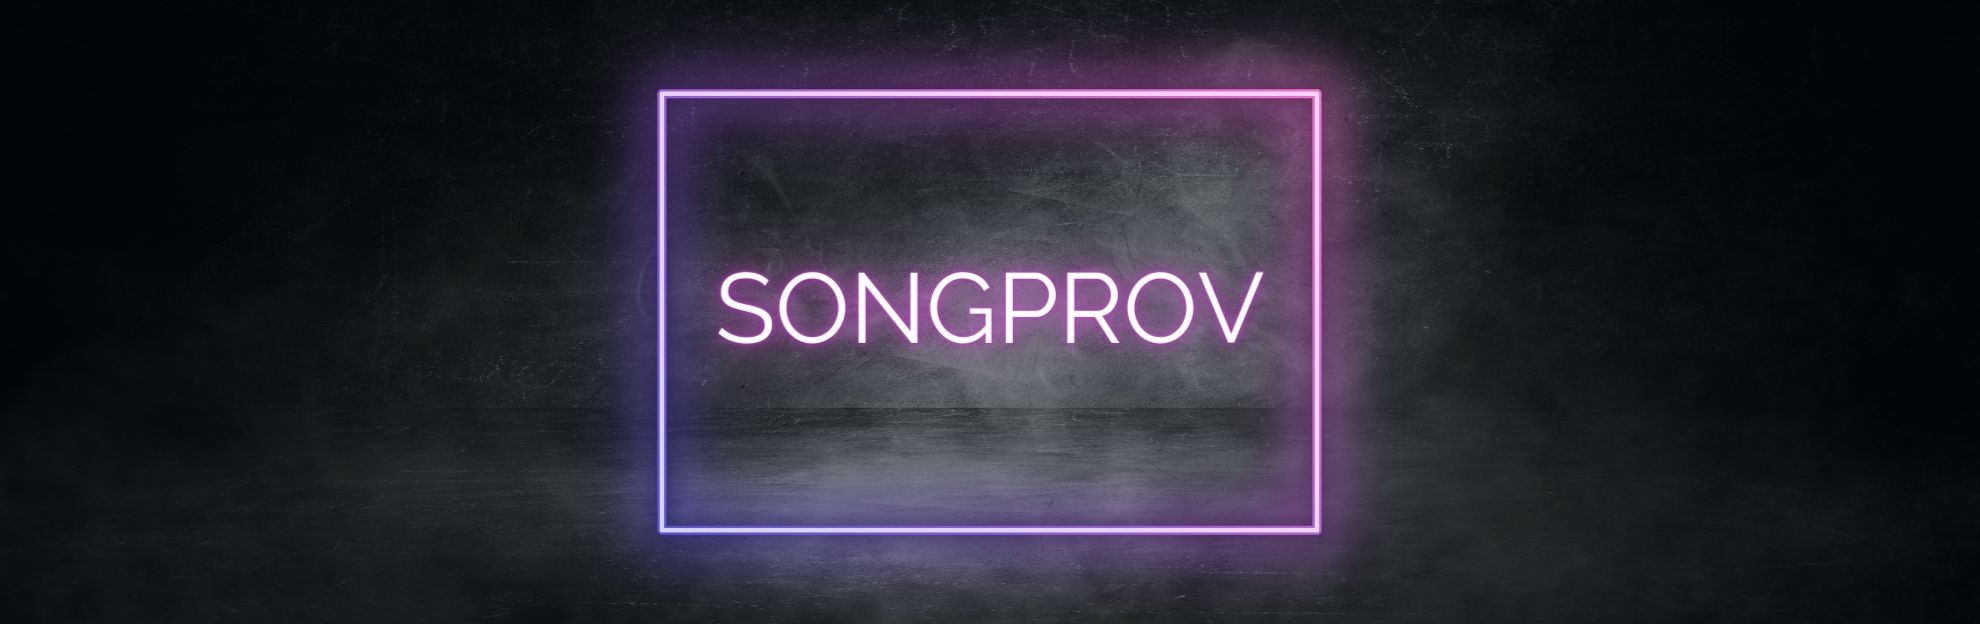 Songprov Student - Celebration Night